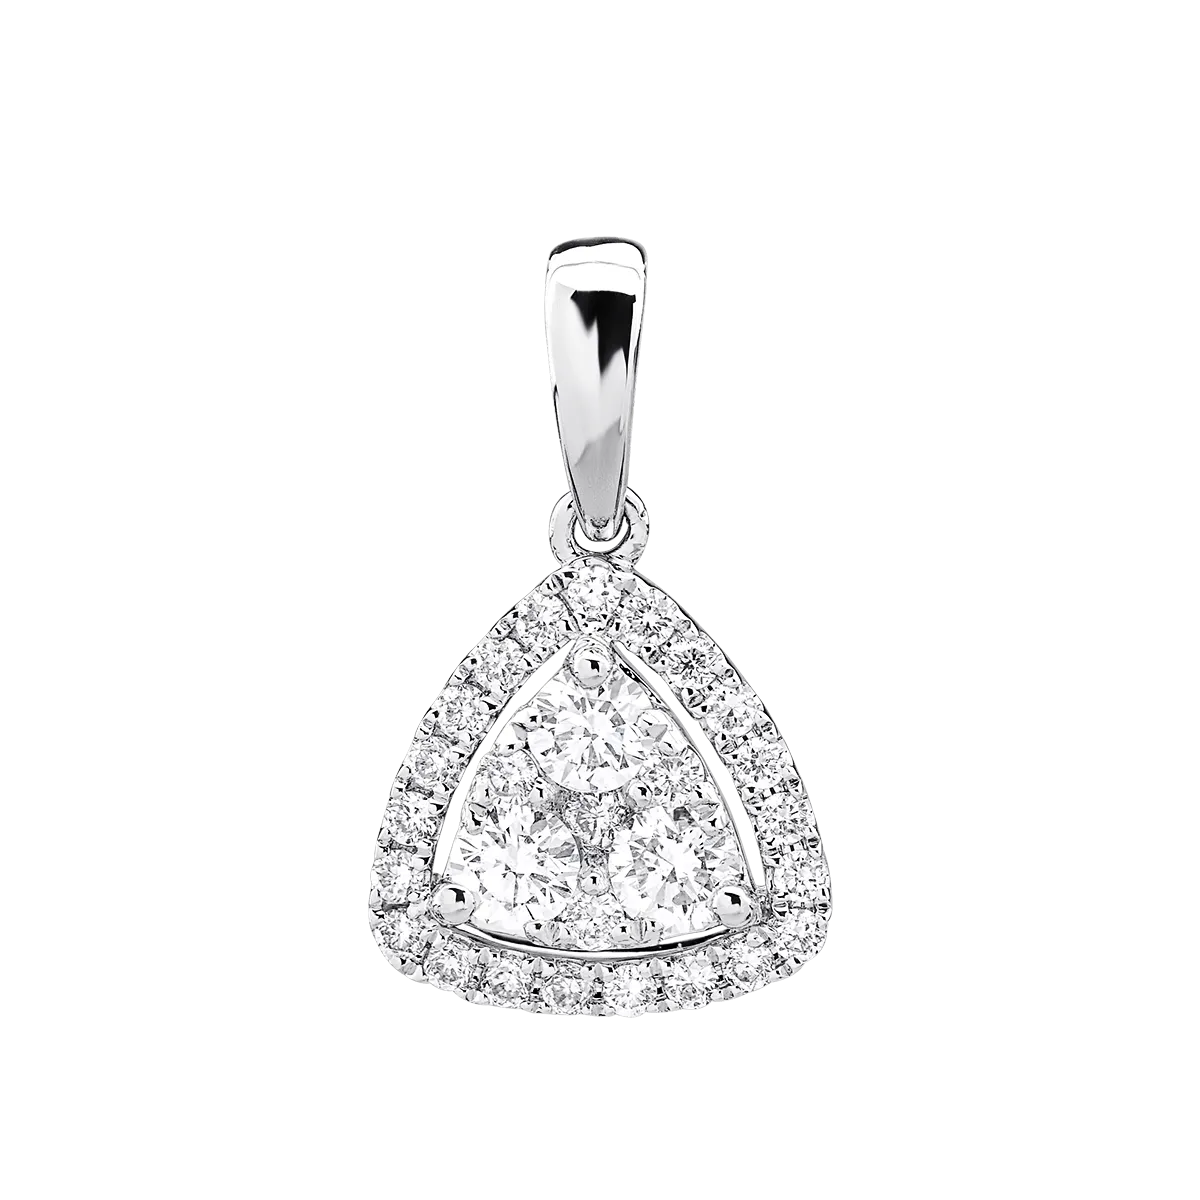 18K white gold pendant with 0.41ct diamonds